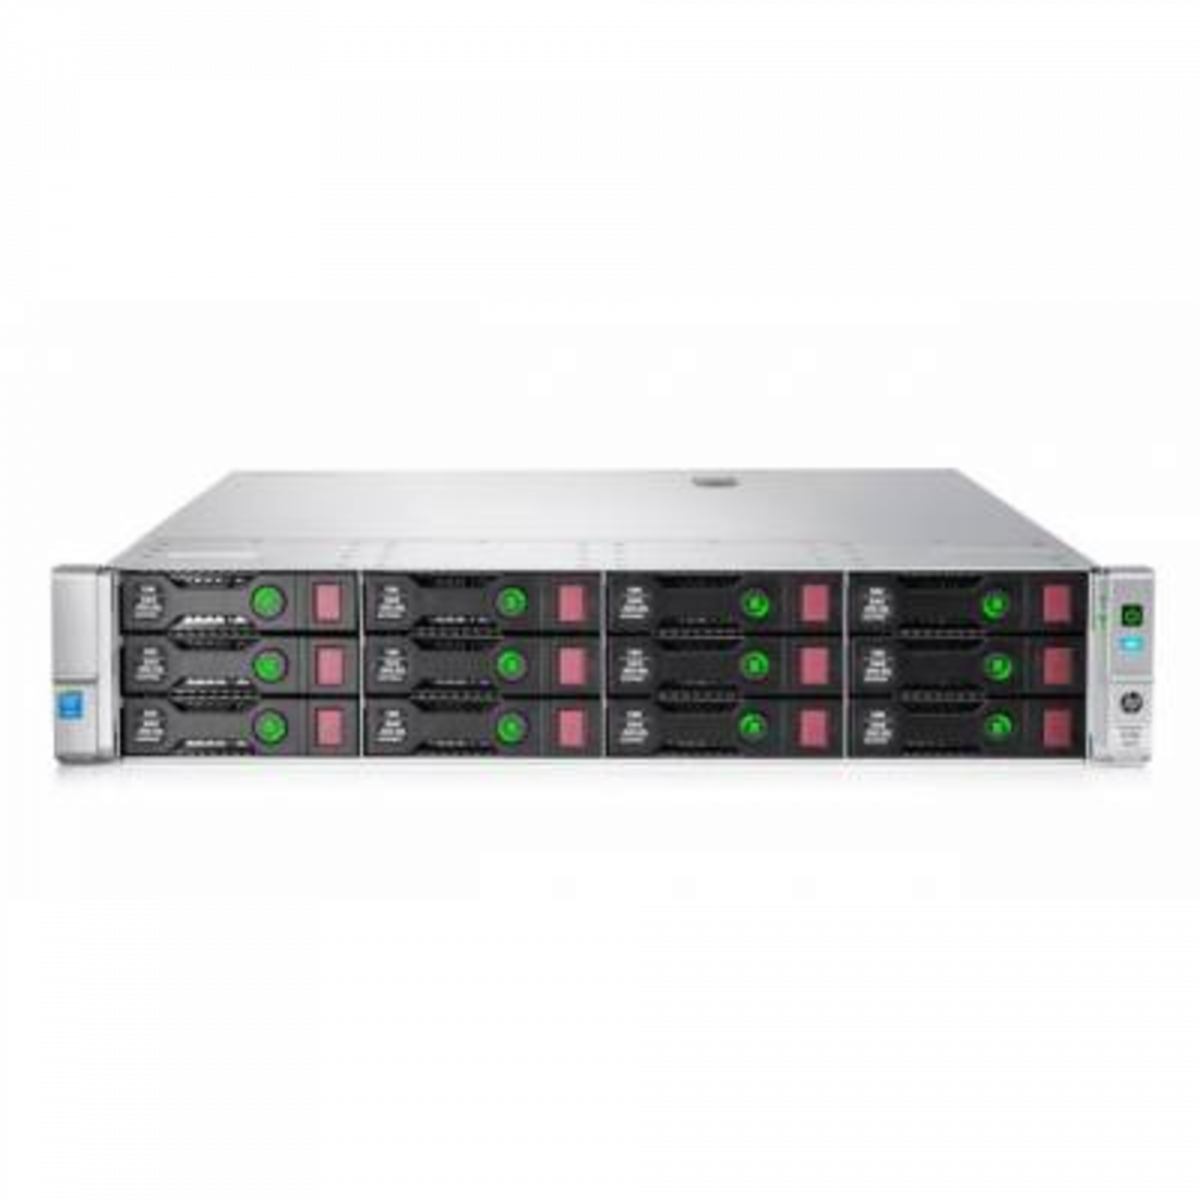 Шасси сервера HP Proliant DL380 Gen9, 15LFF, P840/4GB FBWC